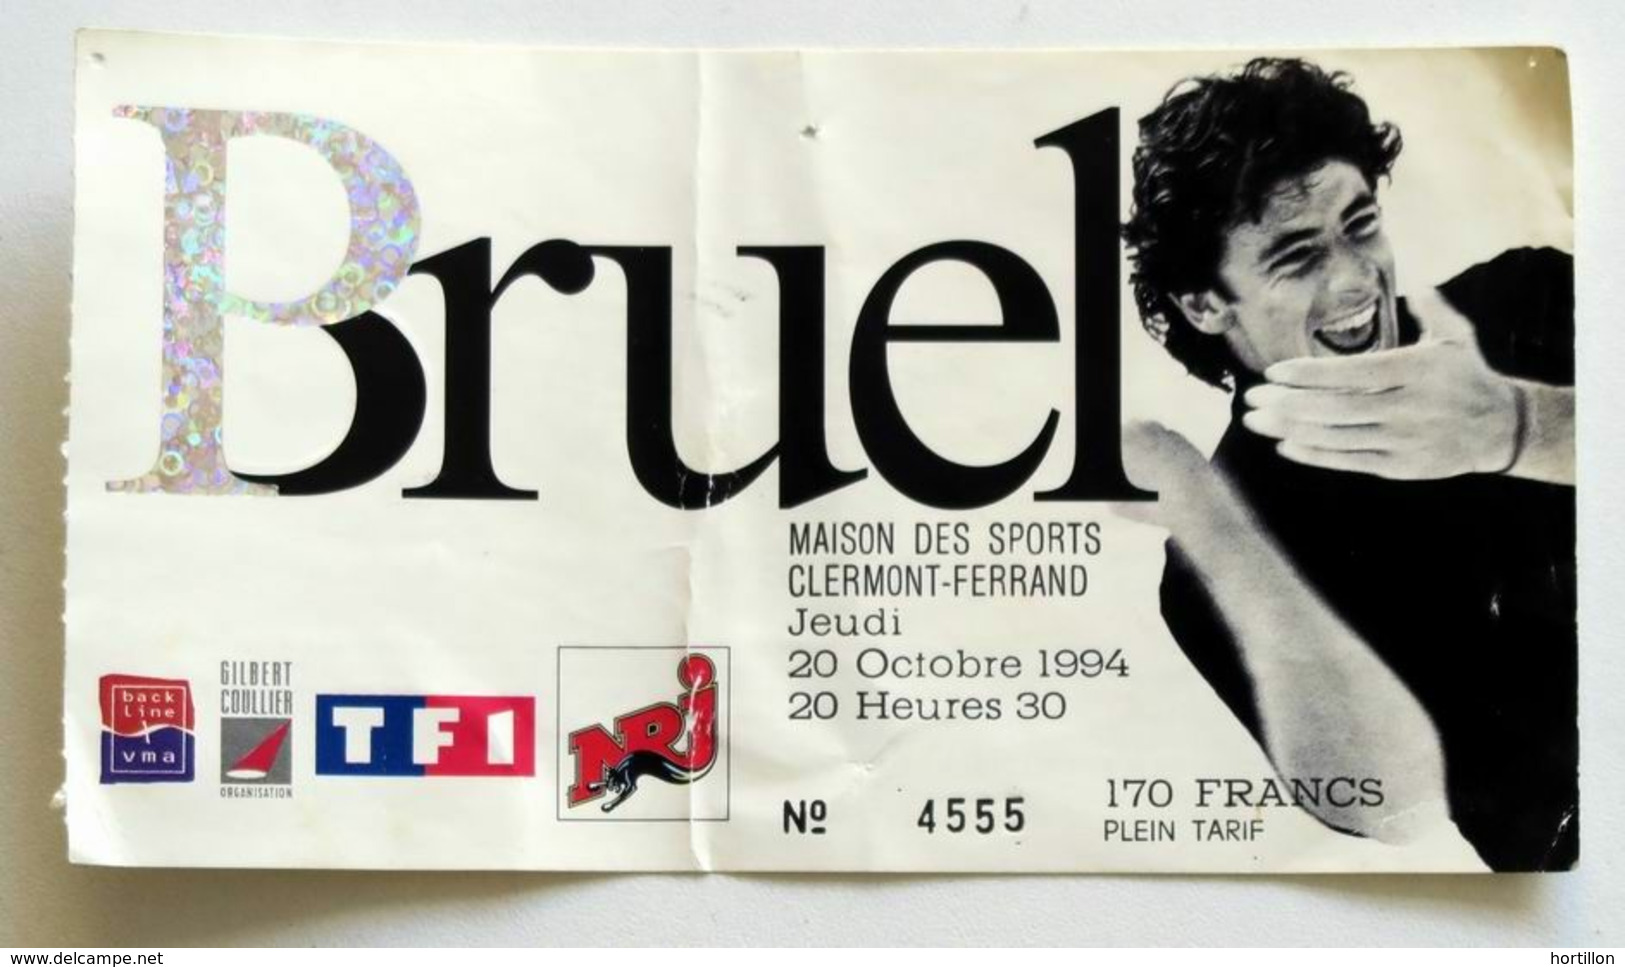 PATRICK BRUEL Billet Concert Collector Ticket CLERMONT-FERRAND 20 OCTOBRE 1994 - Tickets De Concerts